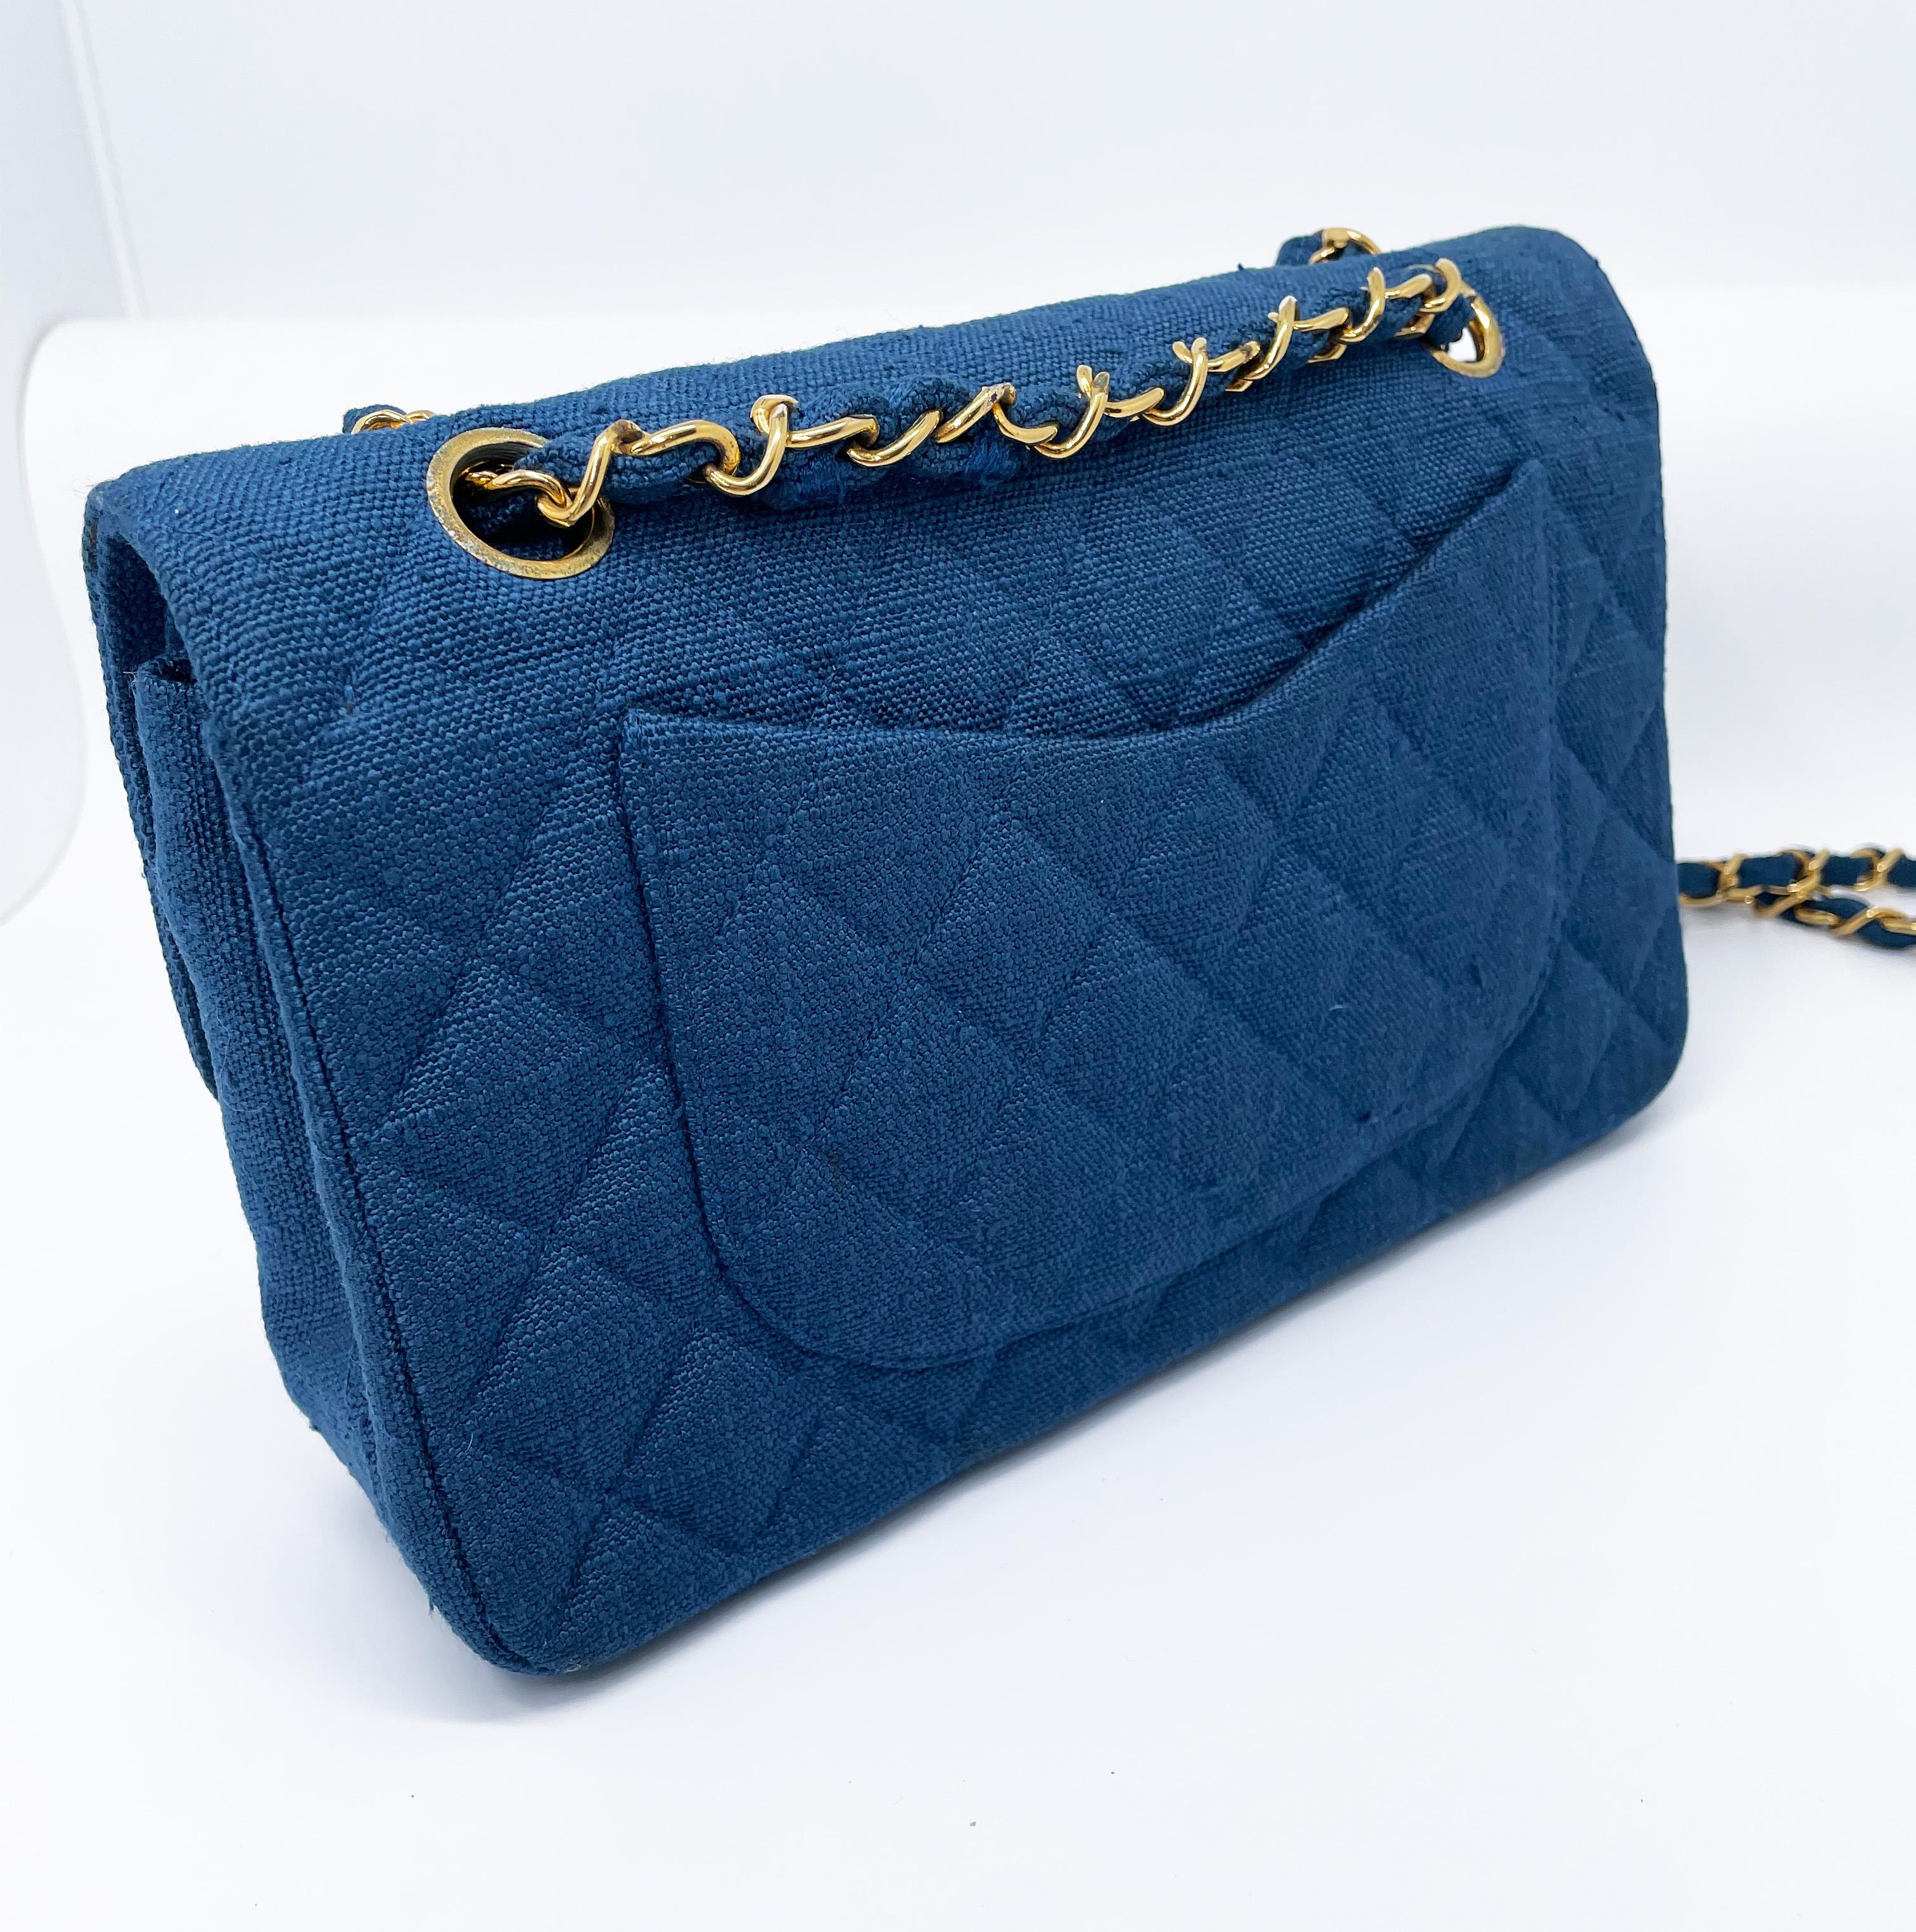 Small Classic Chanel Blue Denim Bag 2